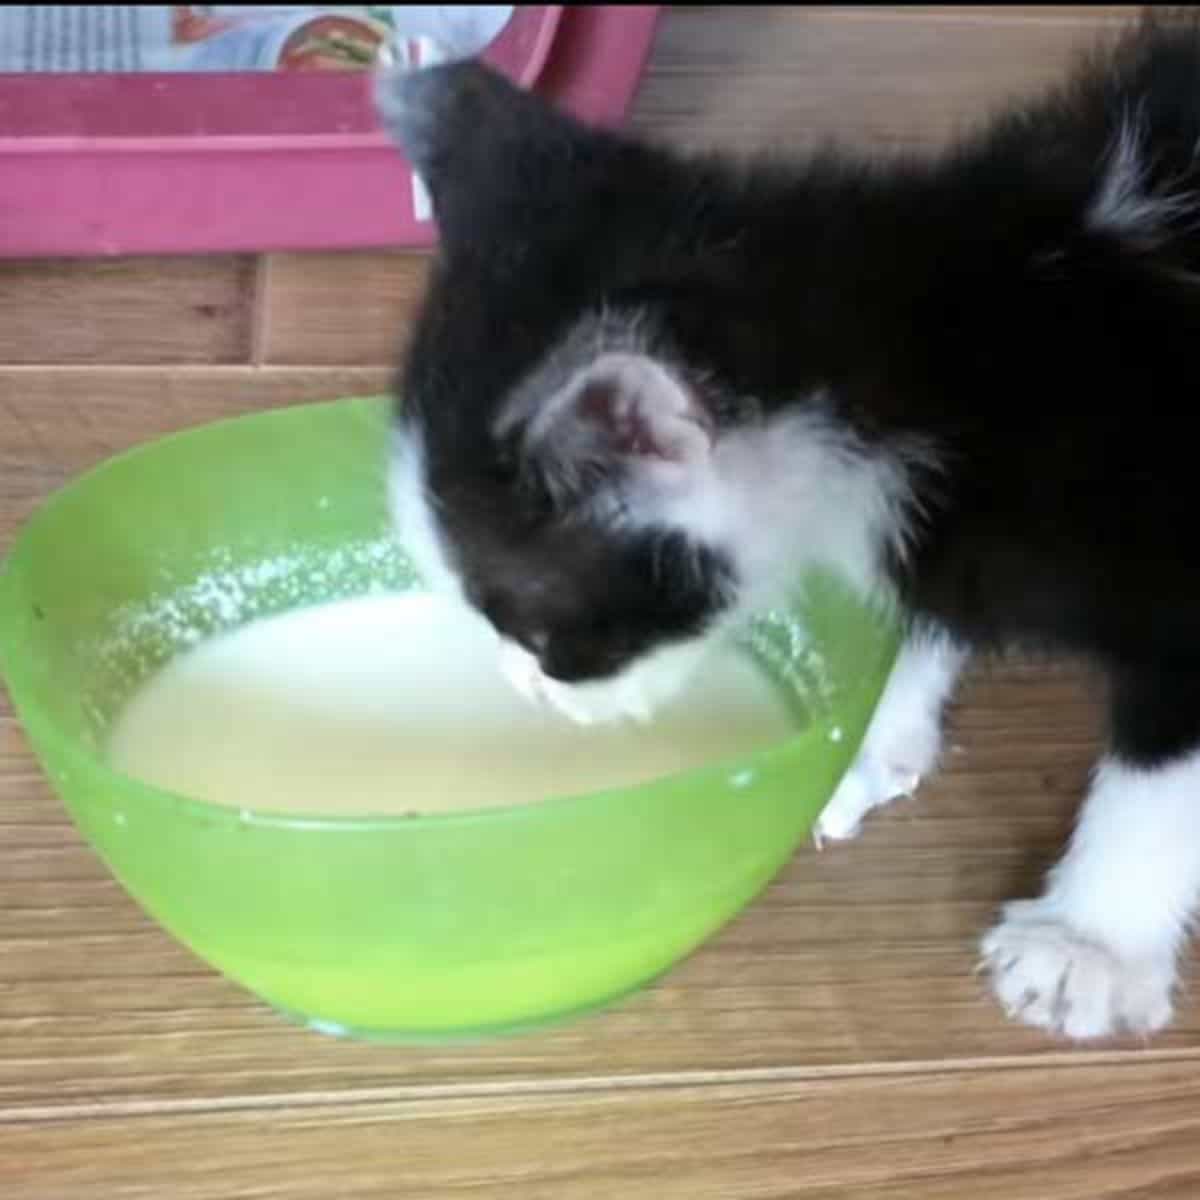 the kitten drinks milk from the bowl